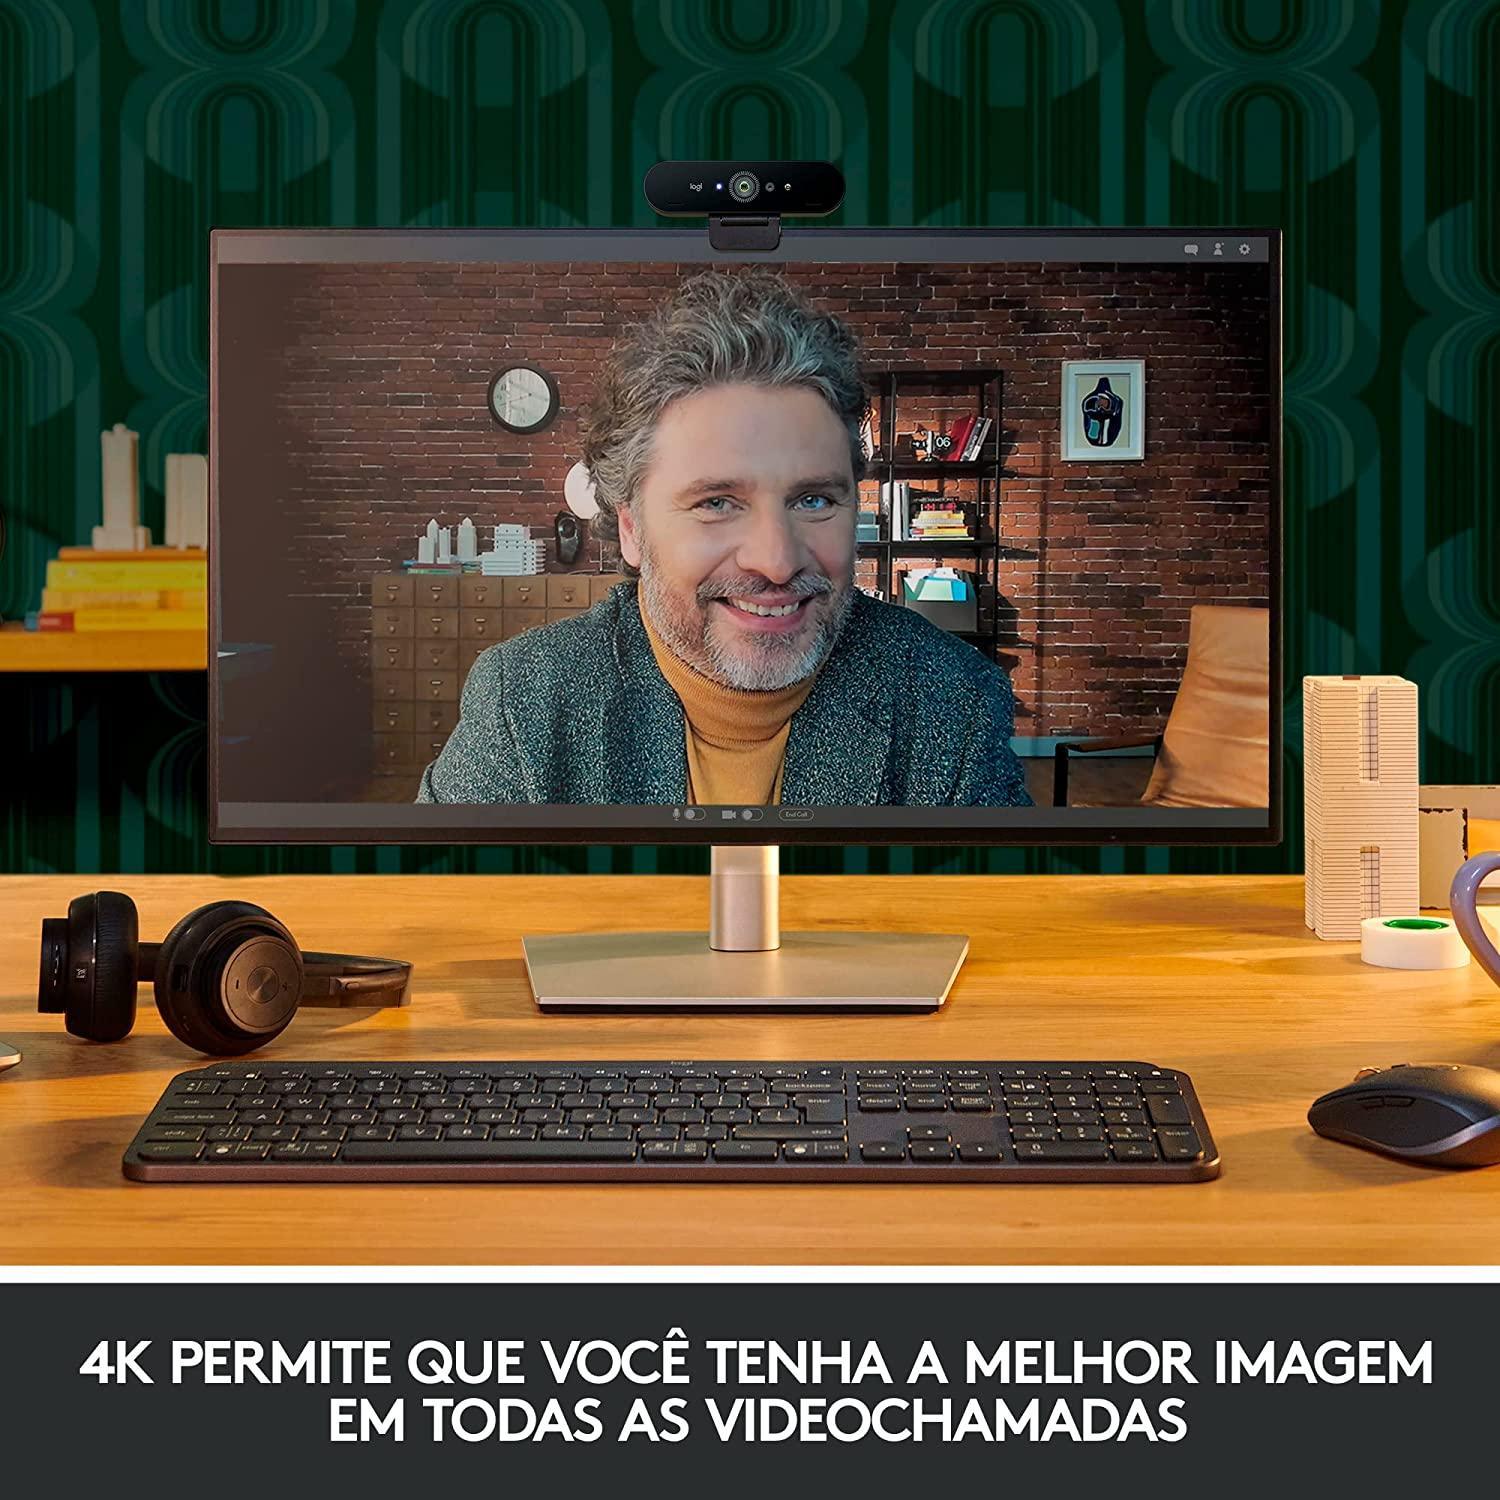 Webcam Logitech 4K PRO Ultra HD Preta 960-001178-V - Mega Market